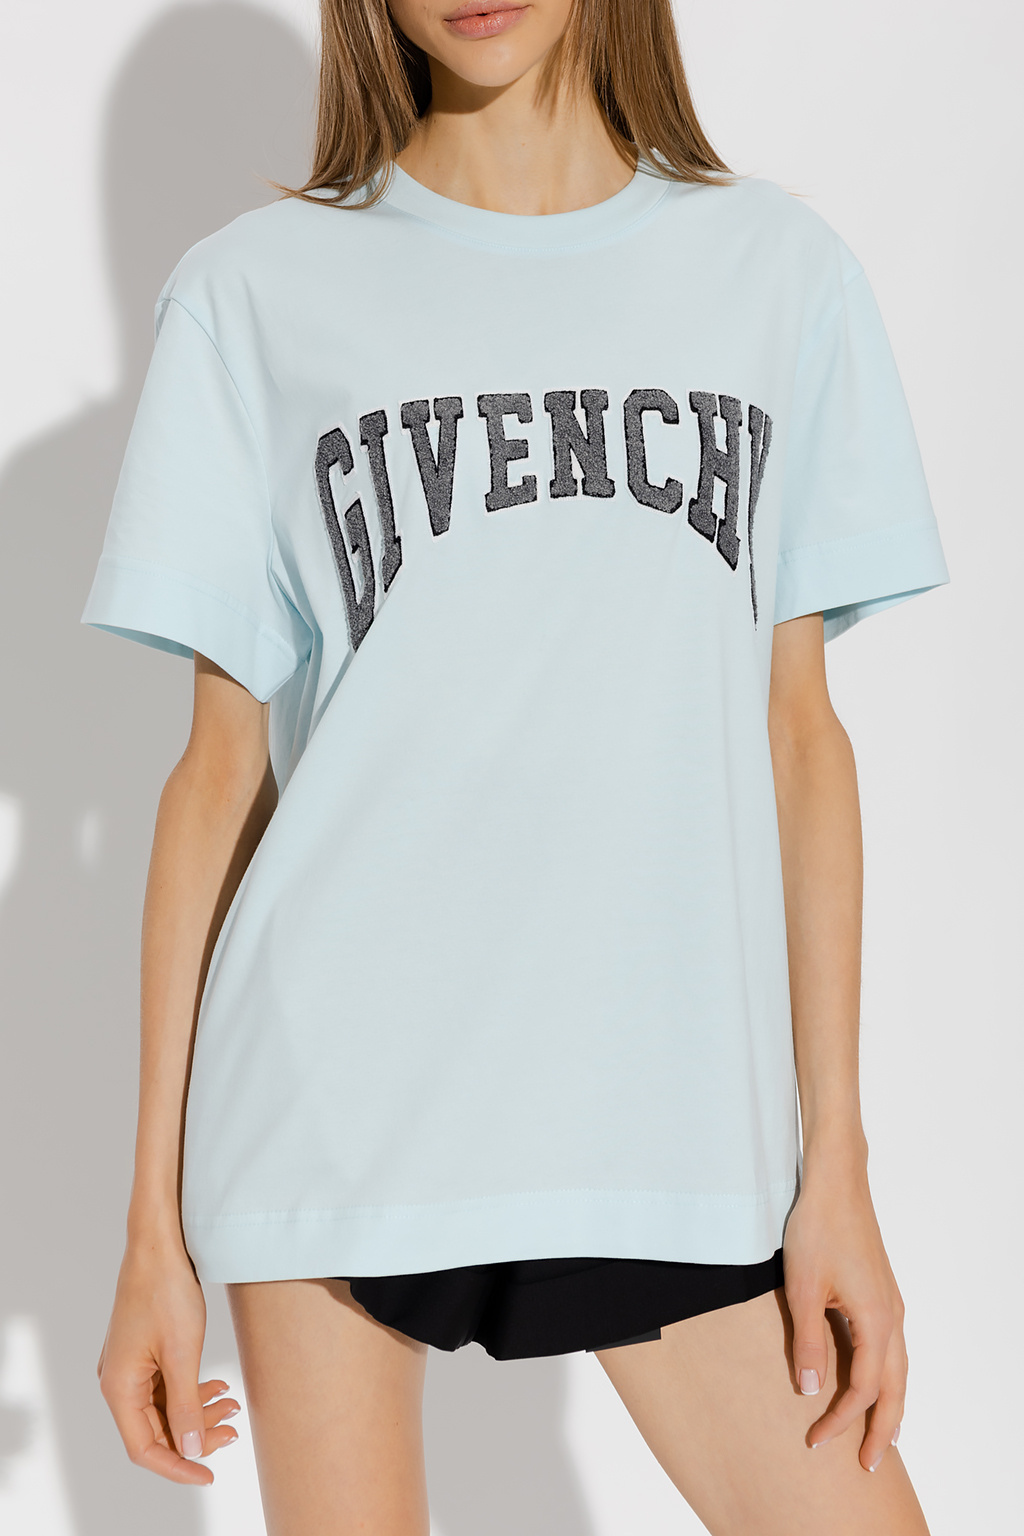 Givenchy Givenchy Motel logo print sweatshirt